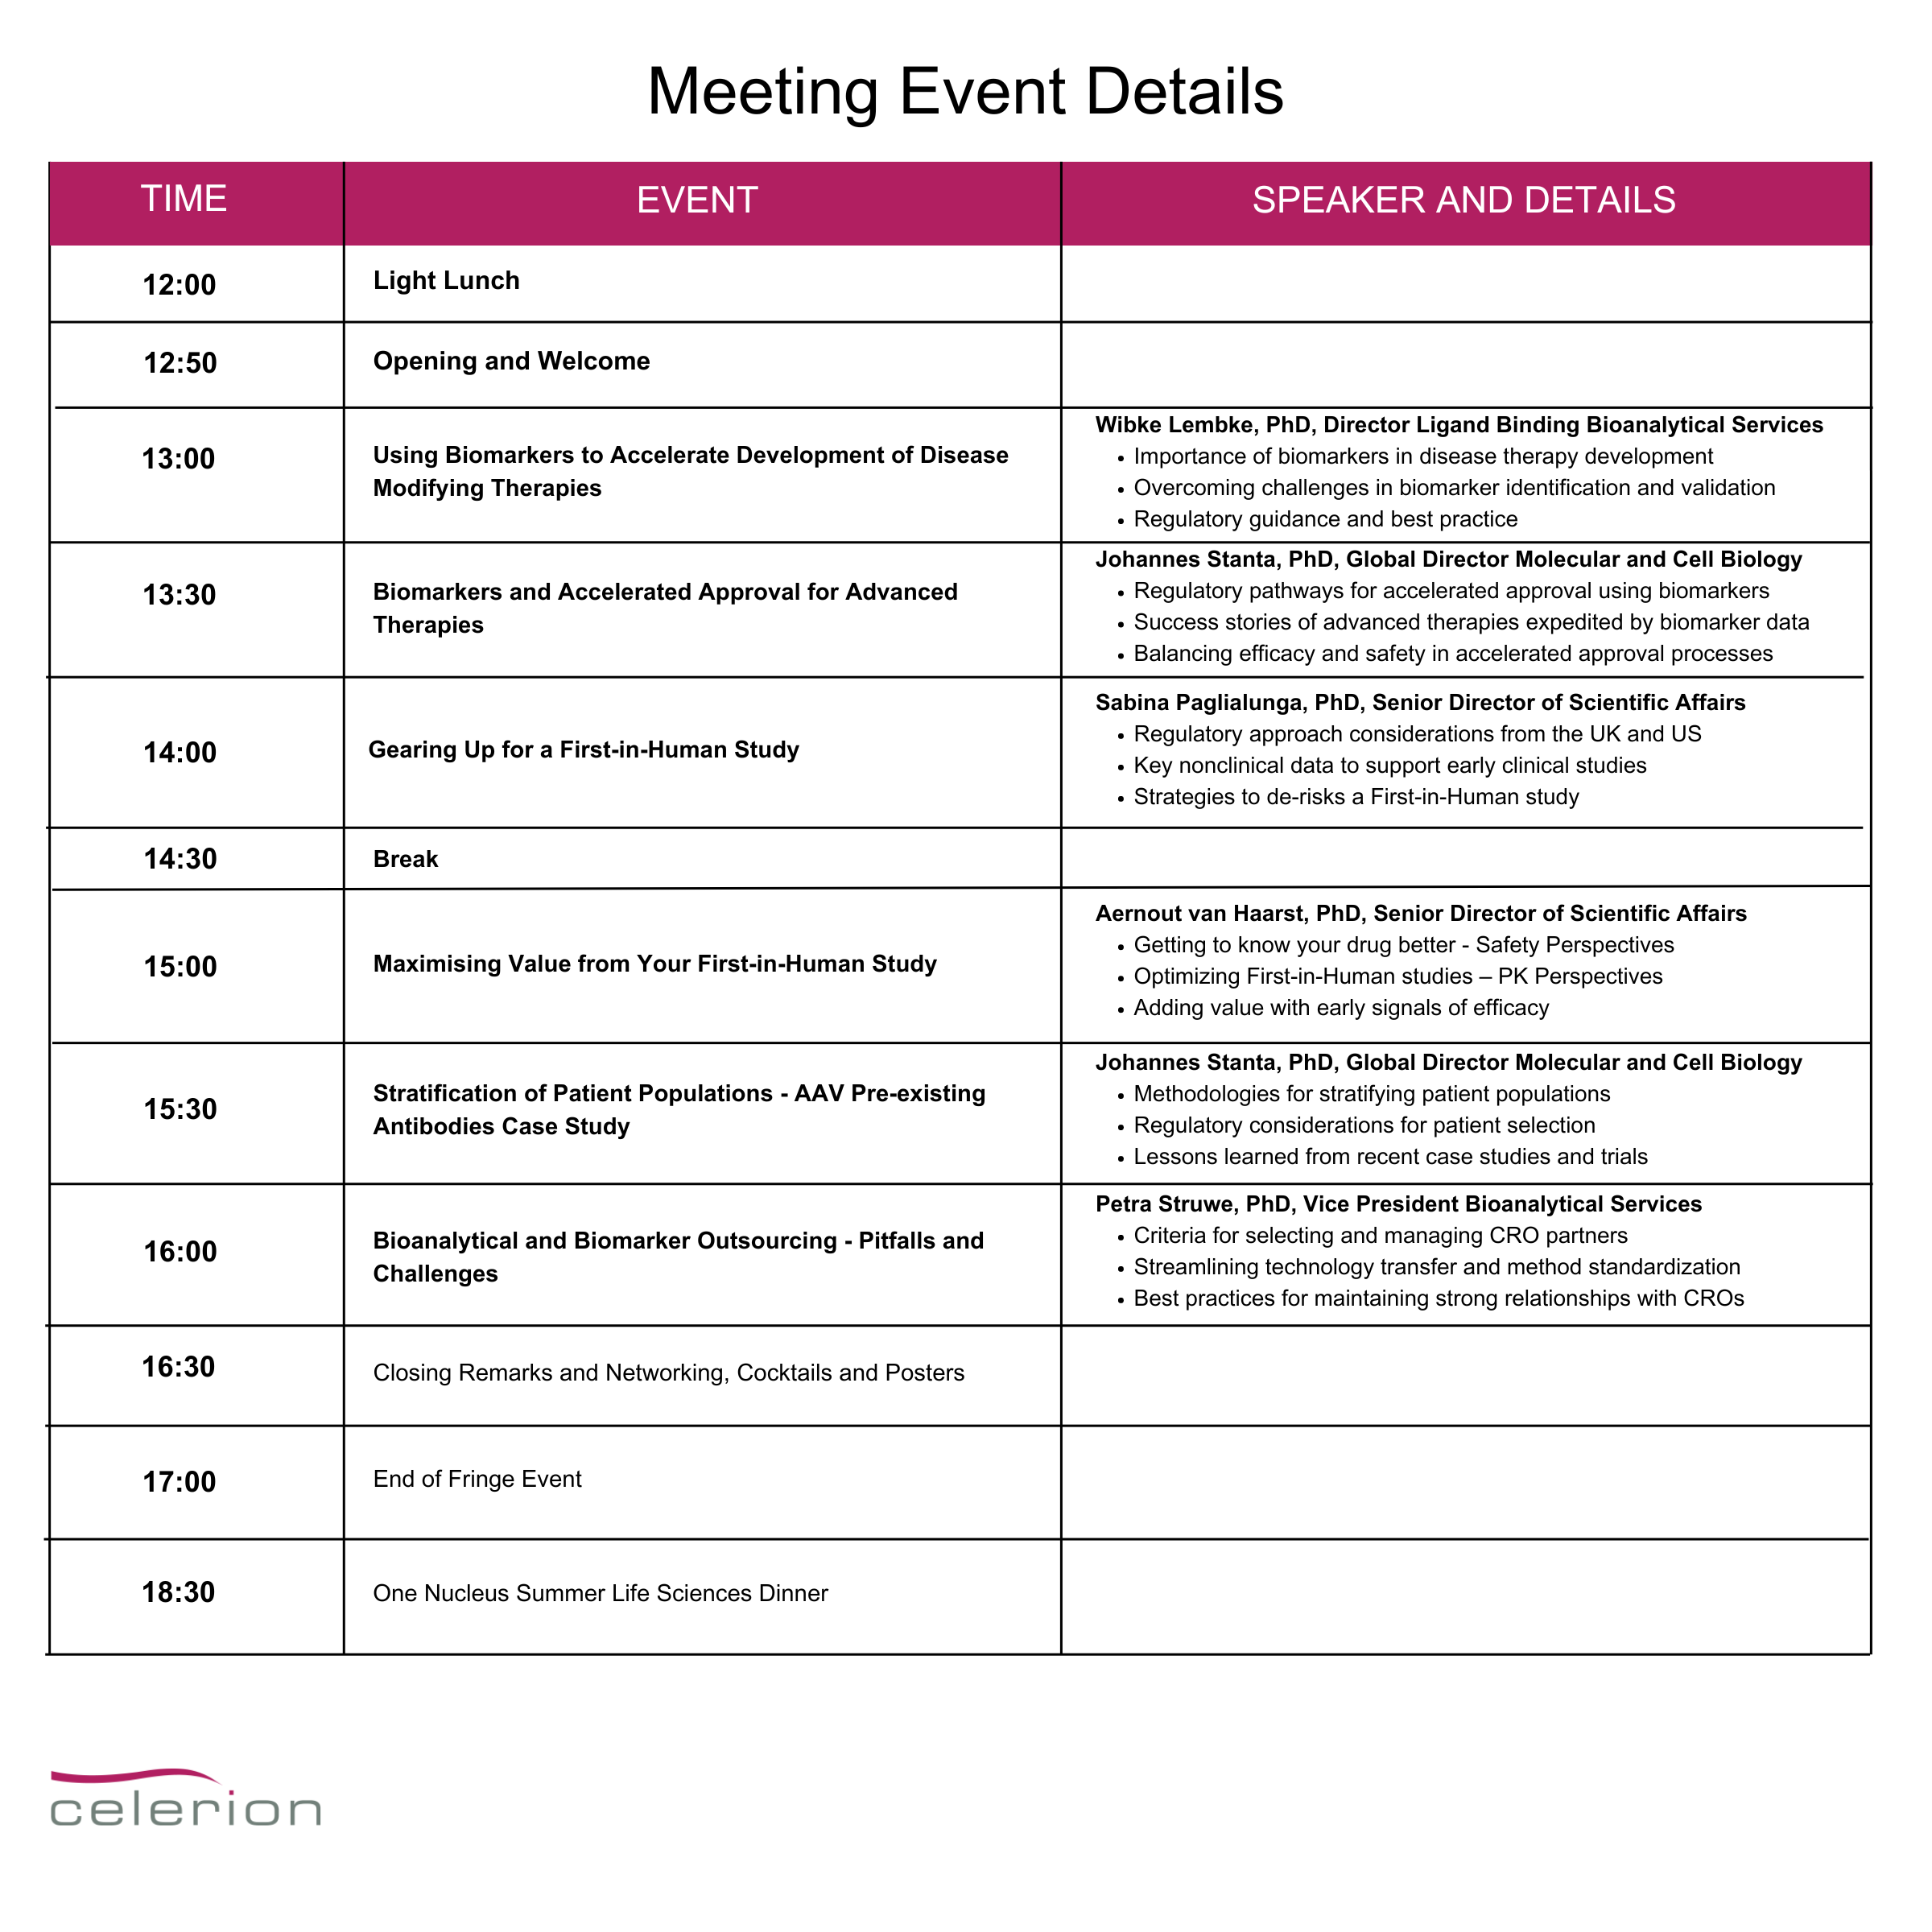 UK Meeting Event Details (6)